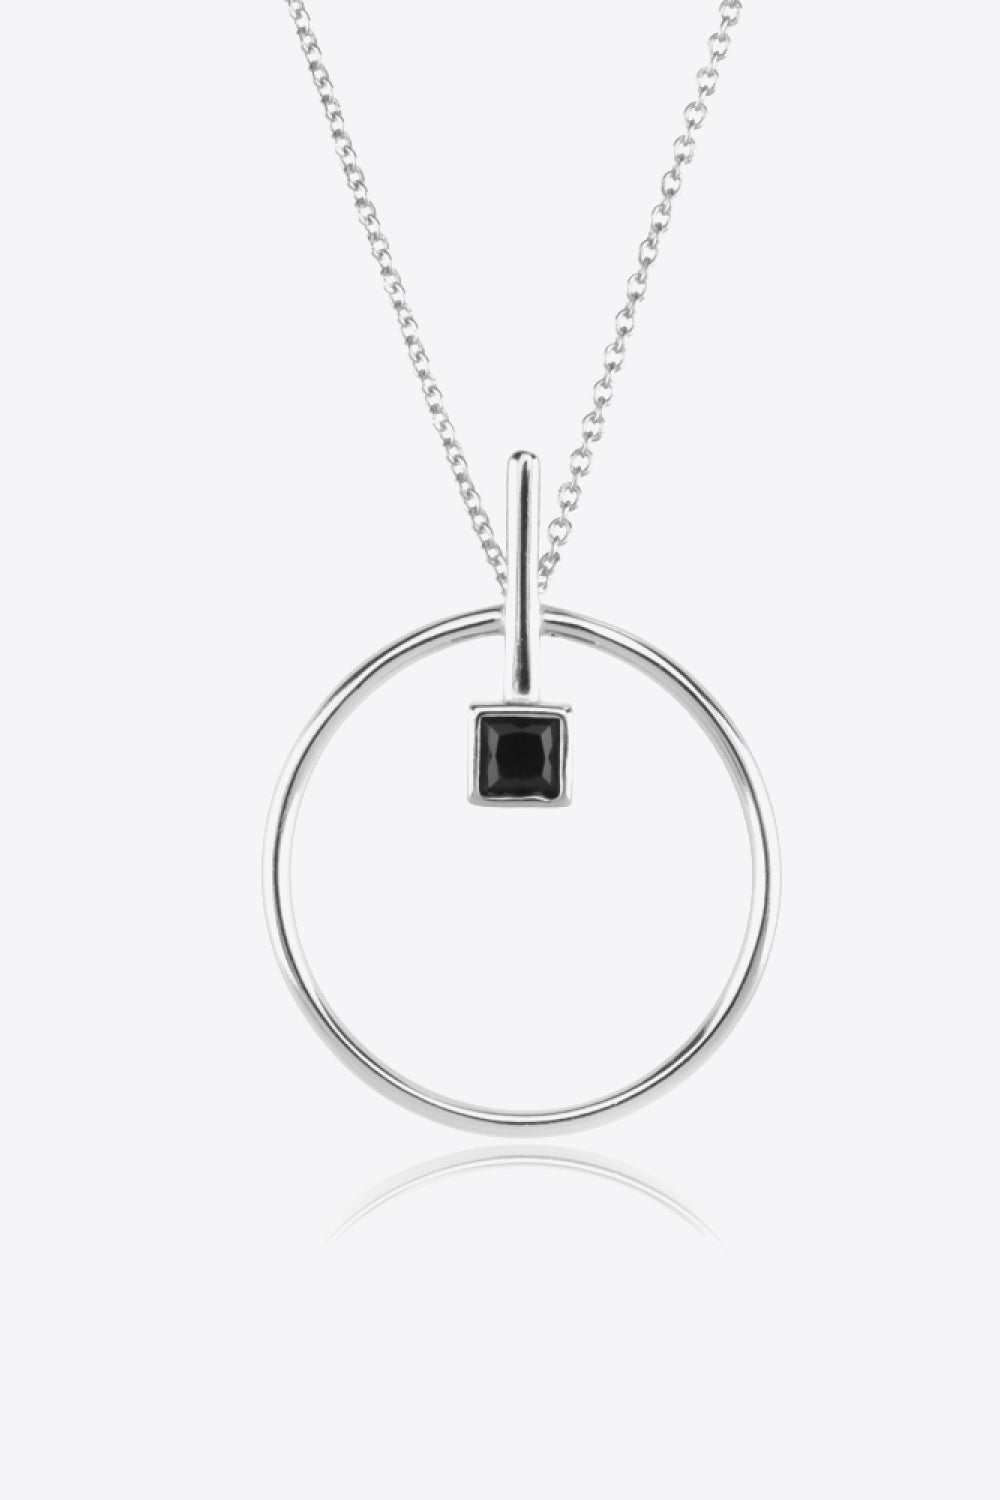 Black Zircon 925 Sterling Silver Necklace - Necklaces - FITGGINS